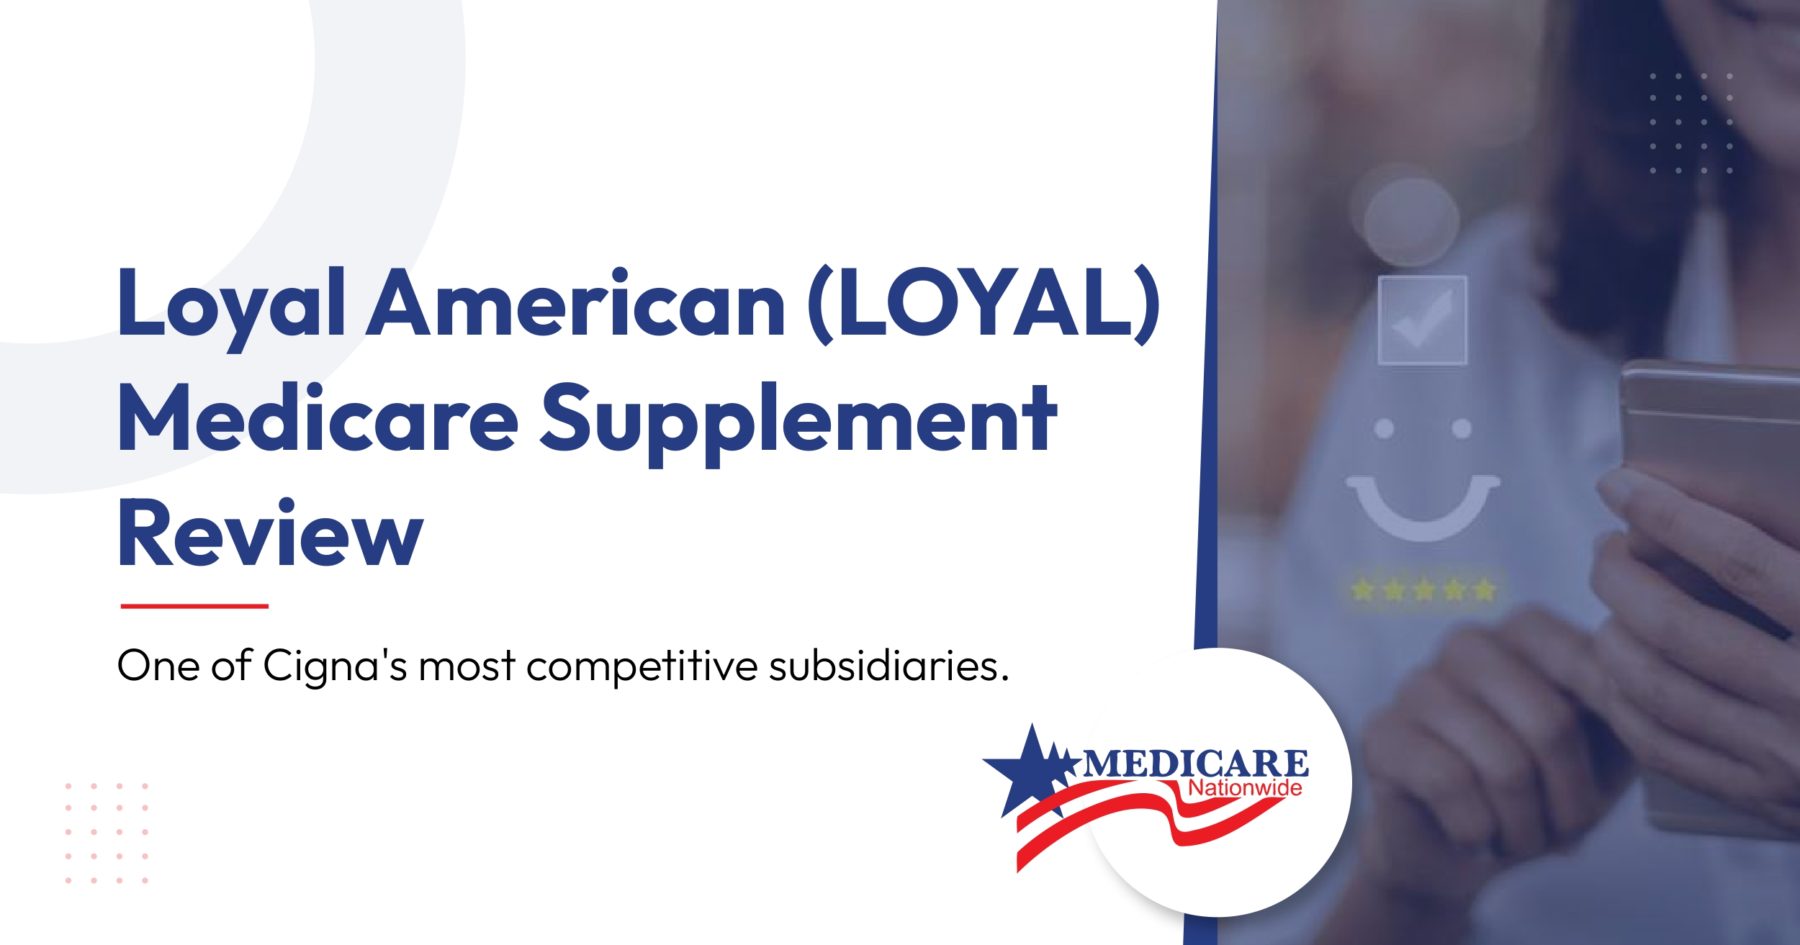 Loyal American (LOYAL) Medicare Supplement Review